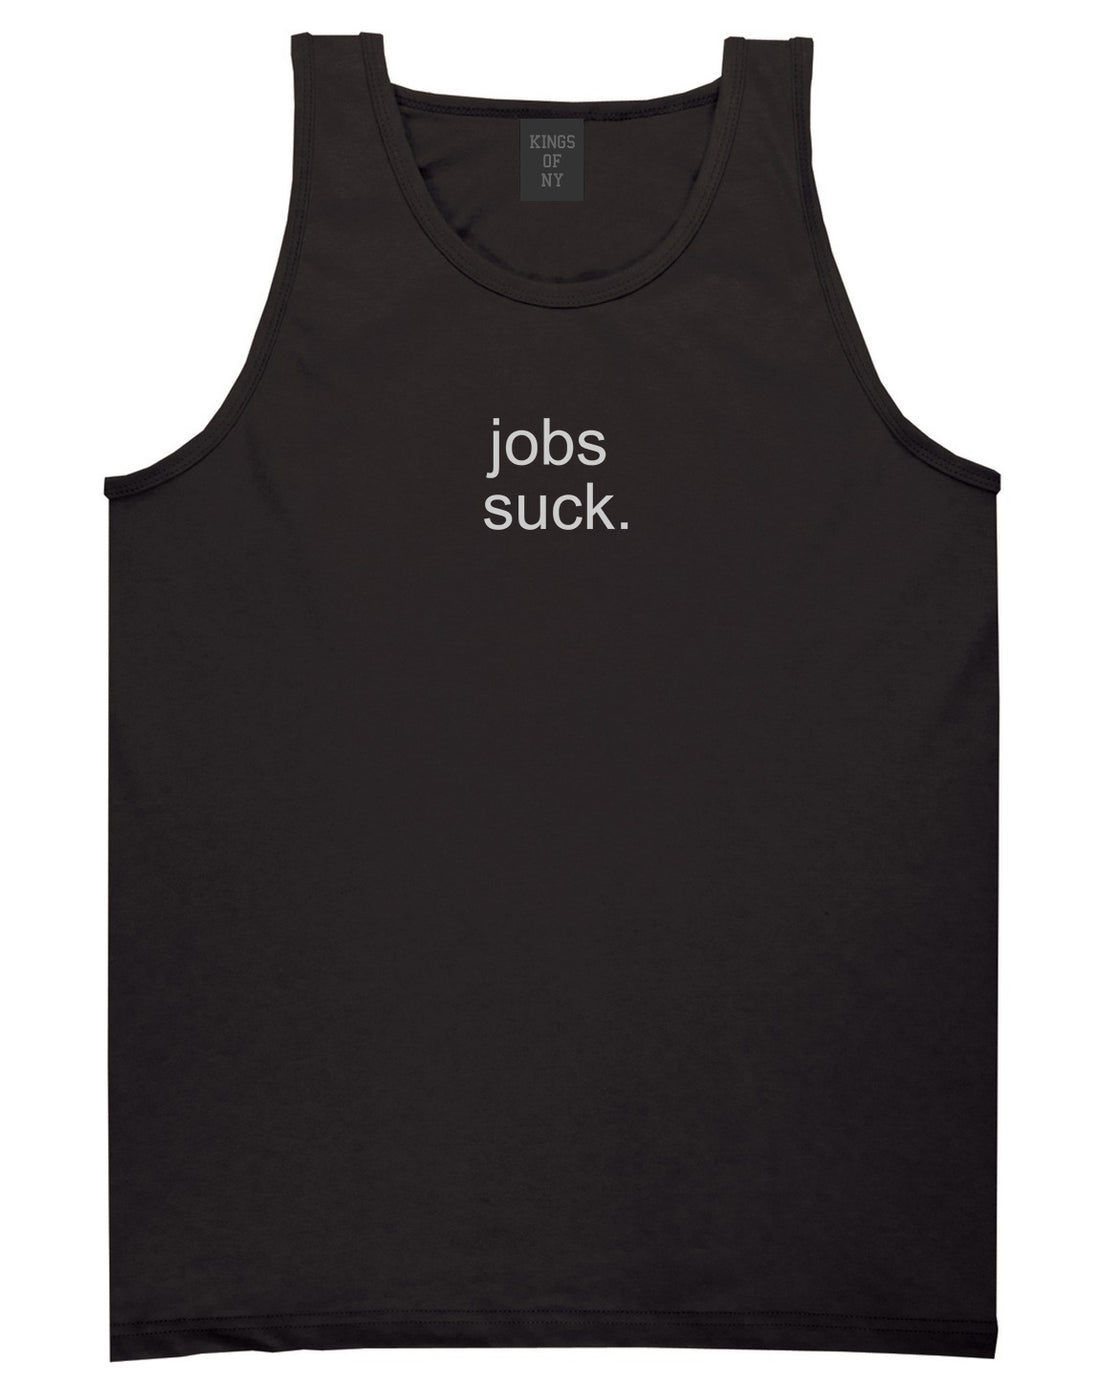 Jobs Suck T-Shirt in Black